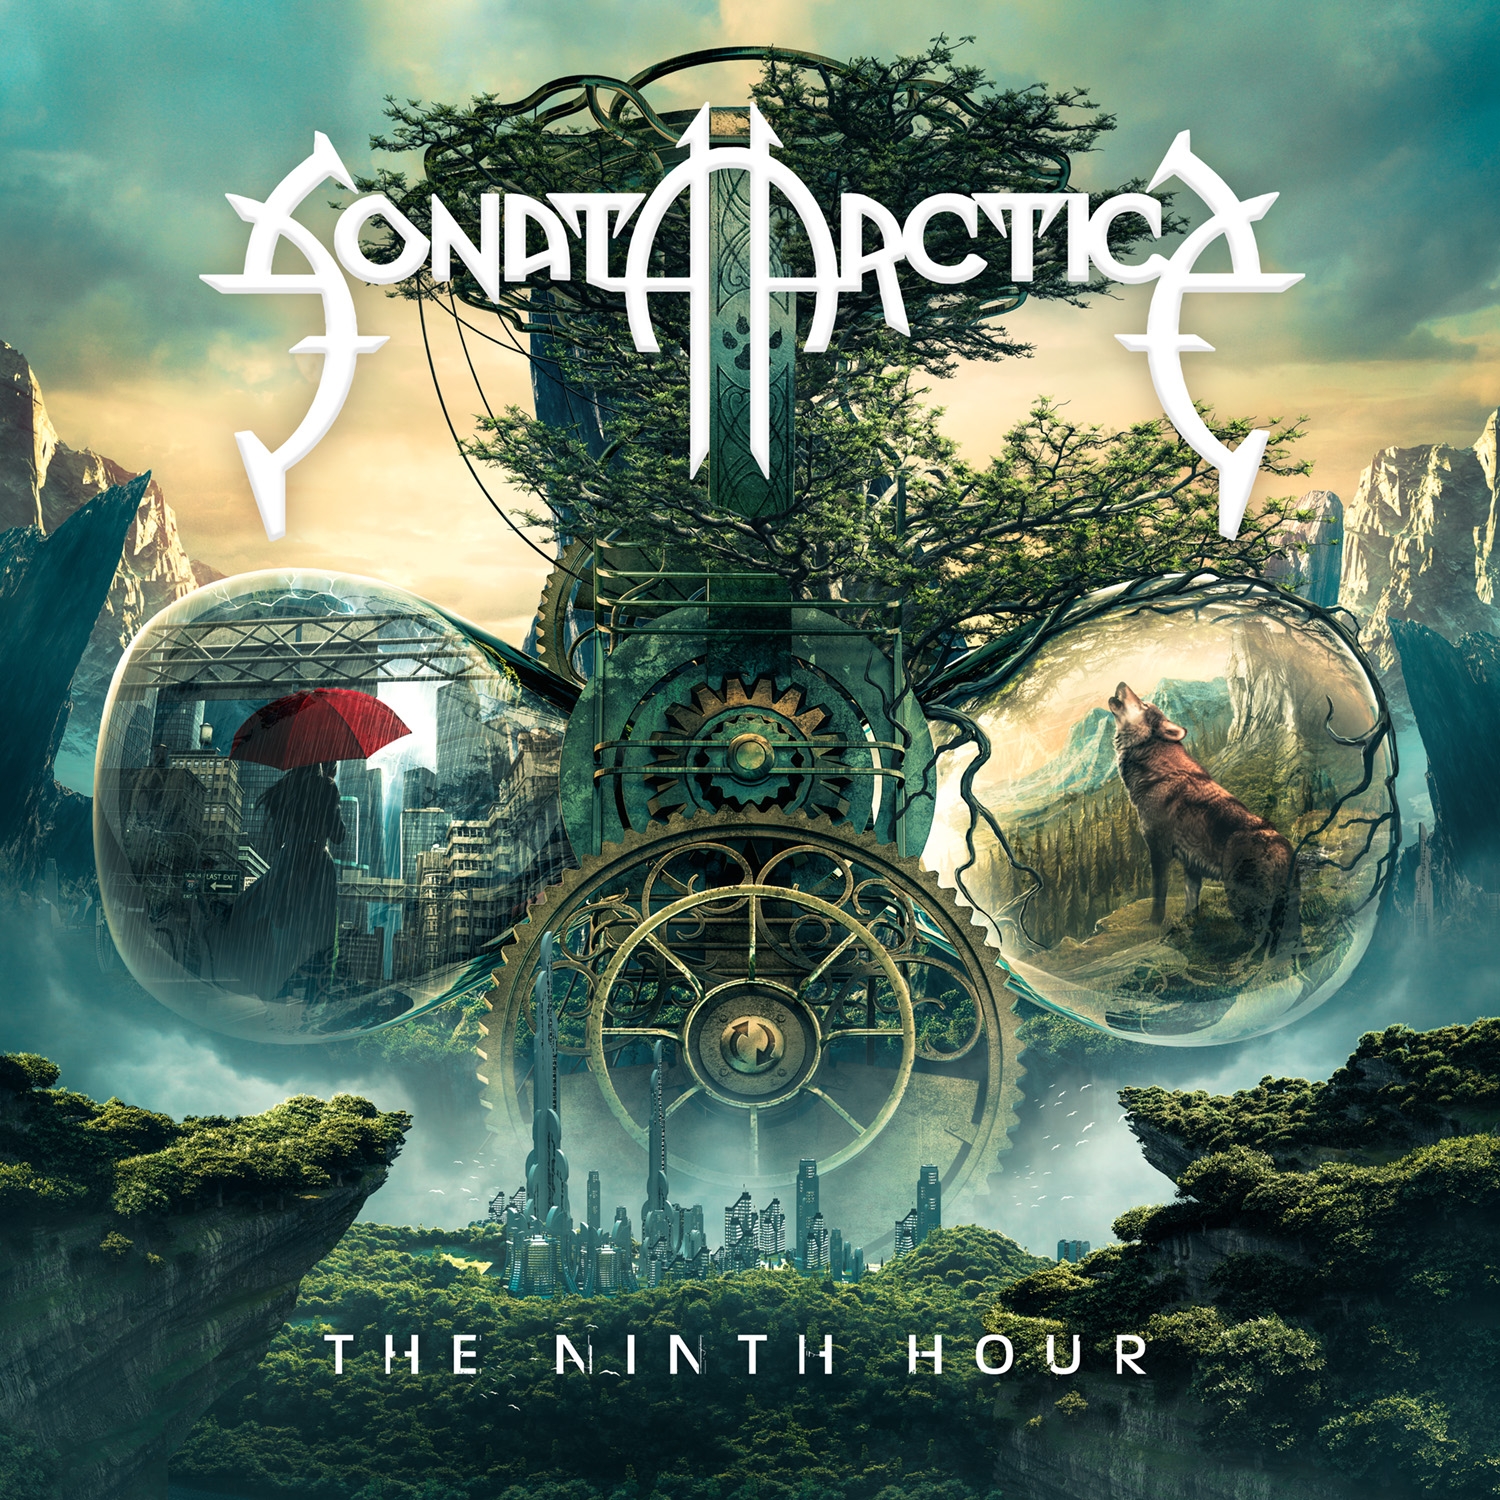 The Ninth Hour – Sonata Arctica